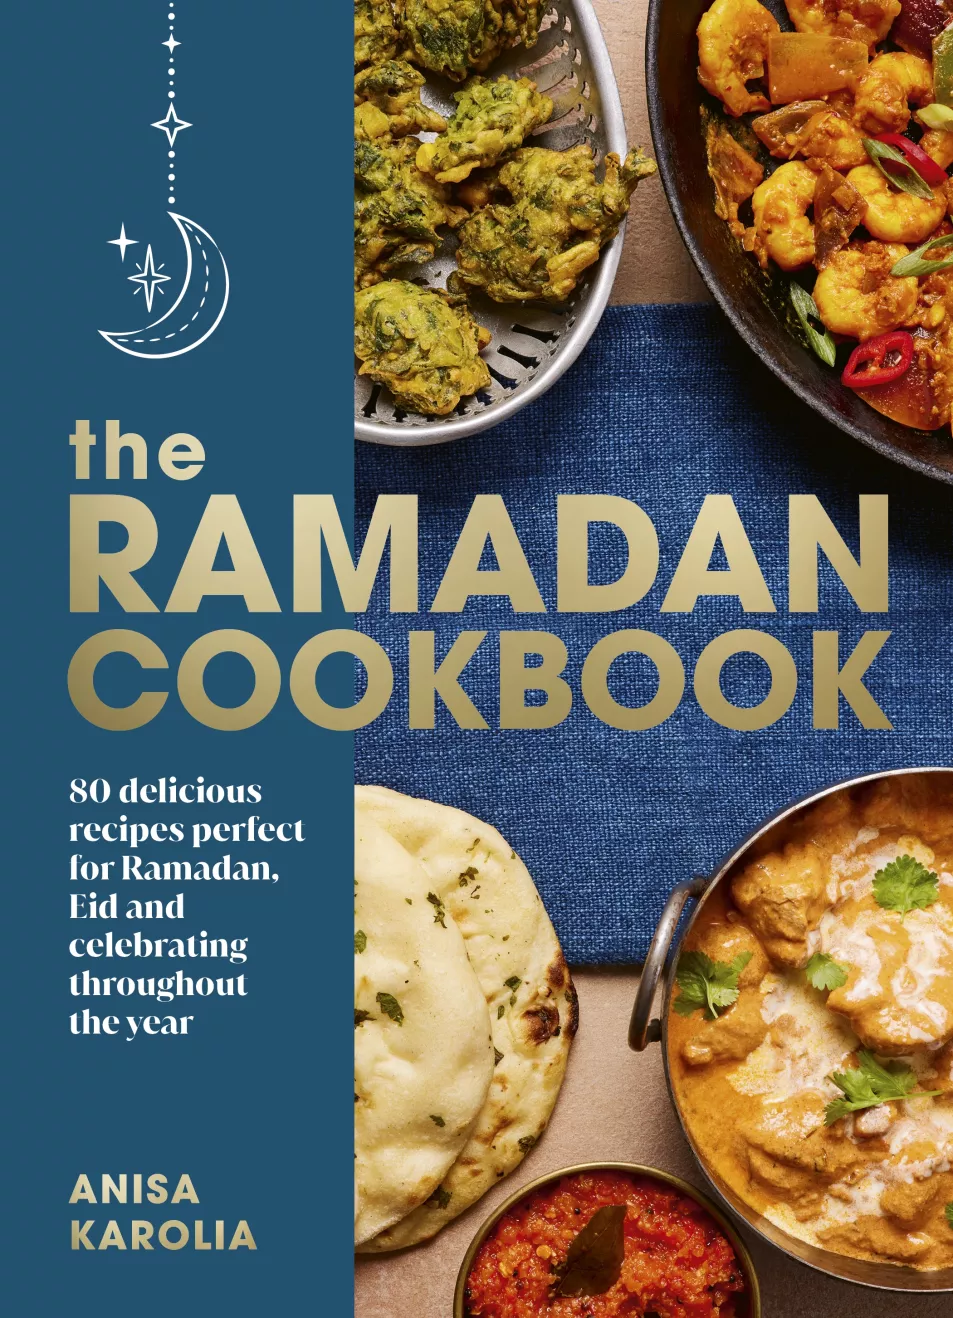 The Ramadan Cookbook by Anisa Karolia